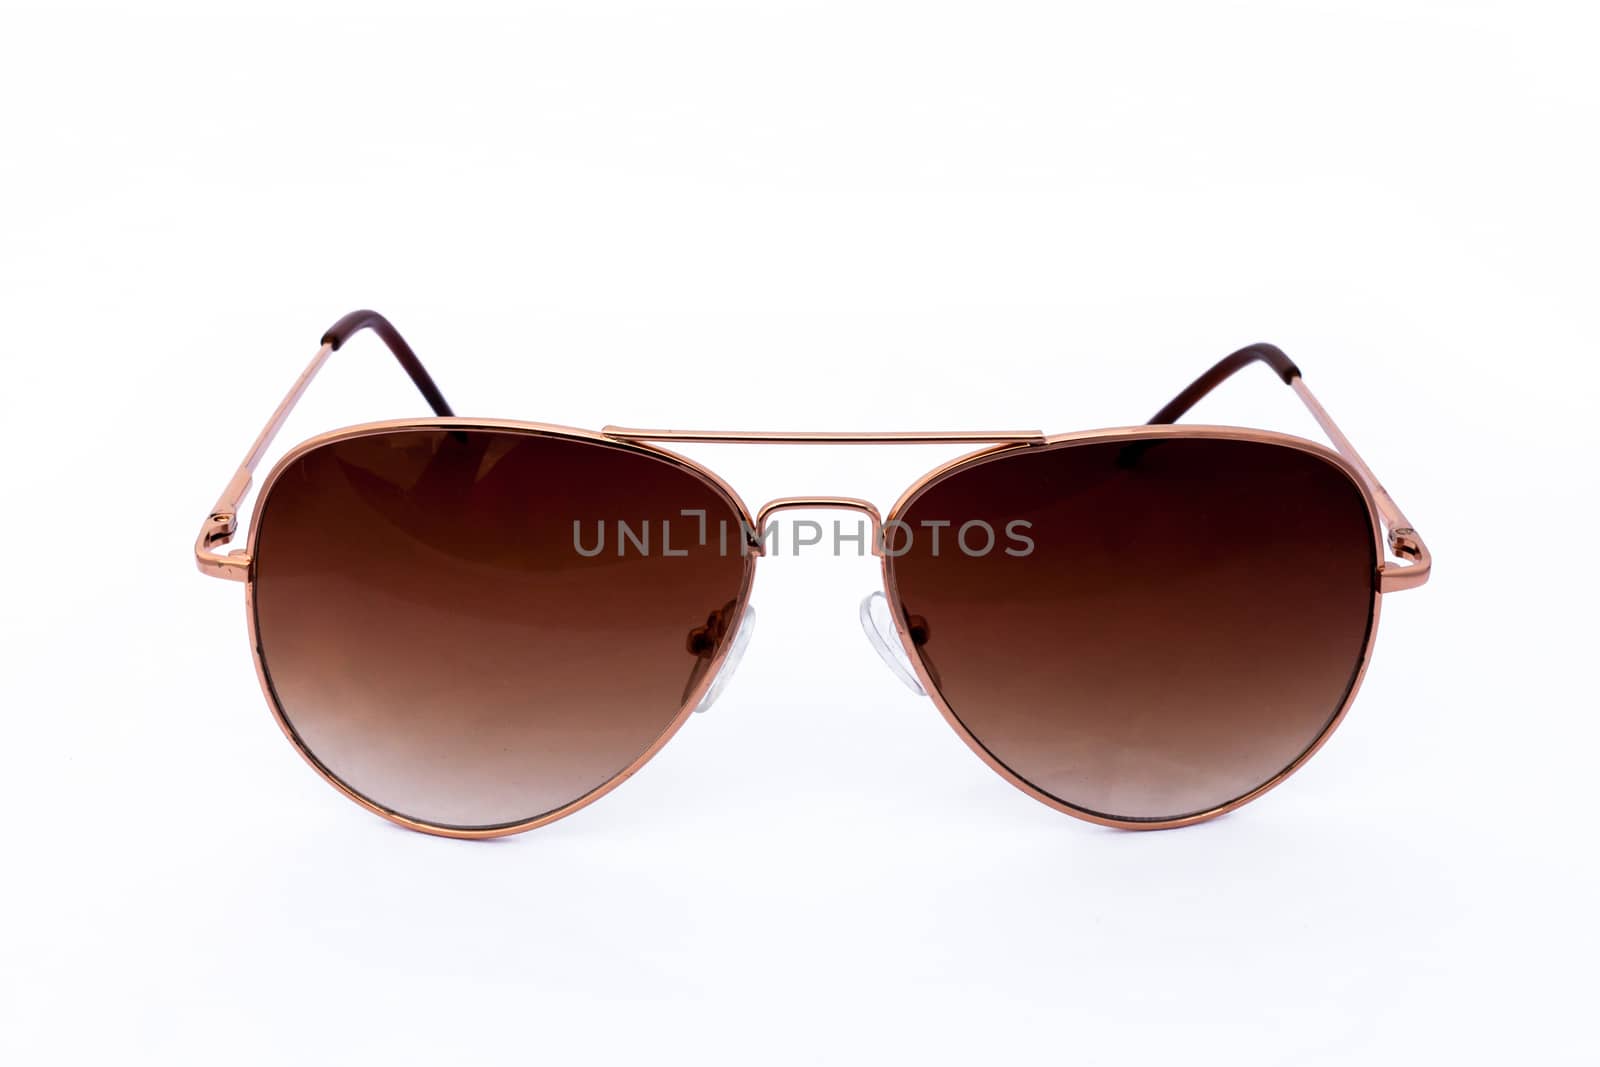 Object elegant sunglasses isolated on the white.